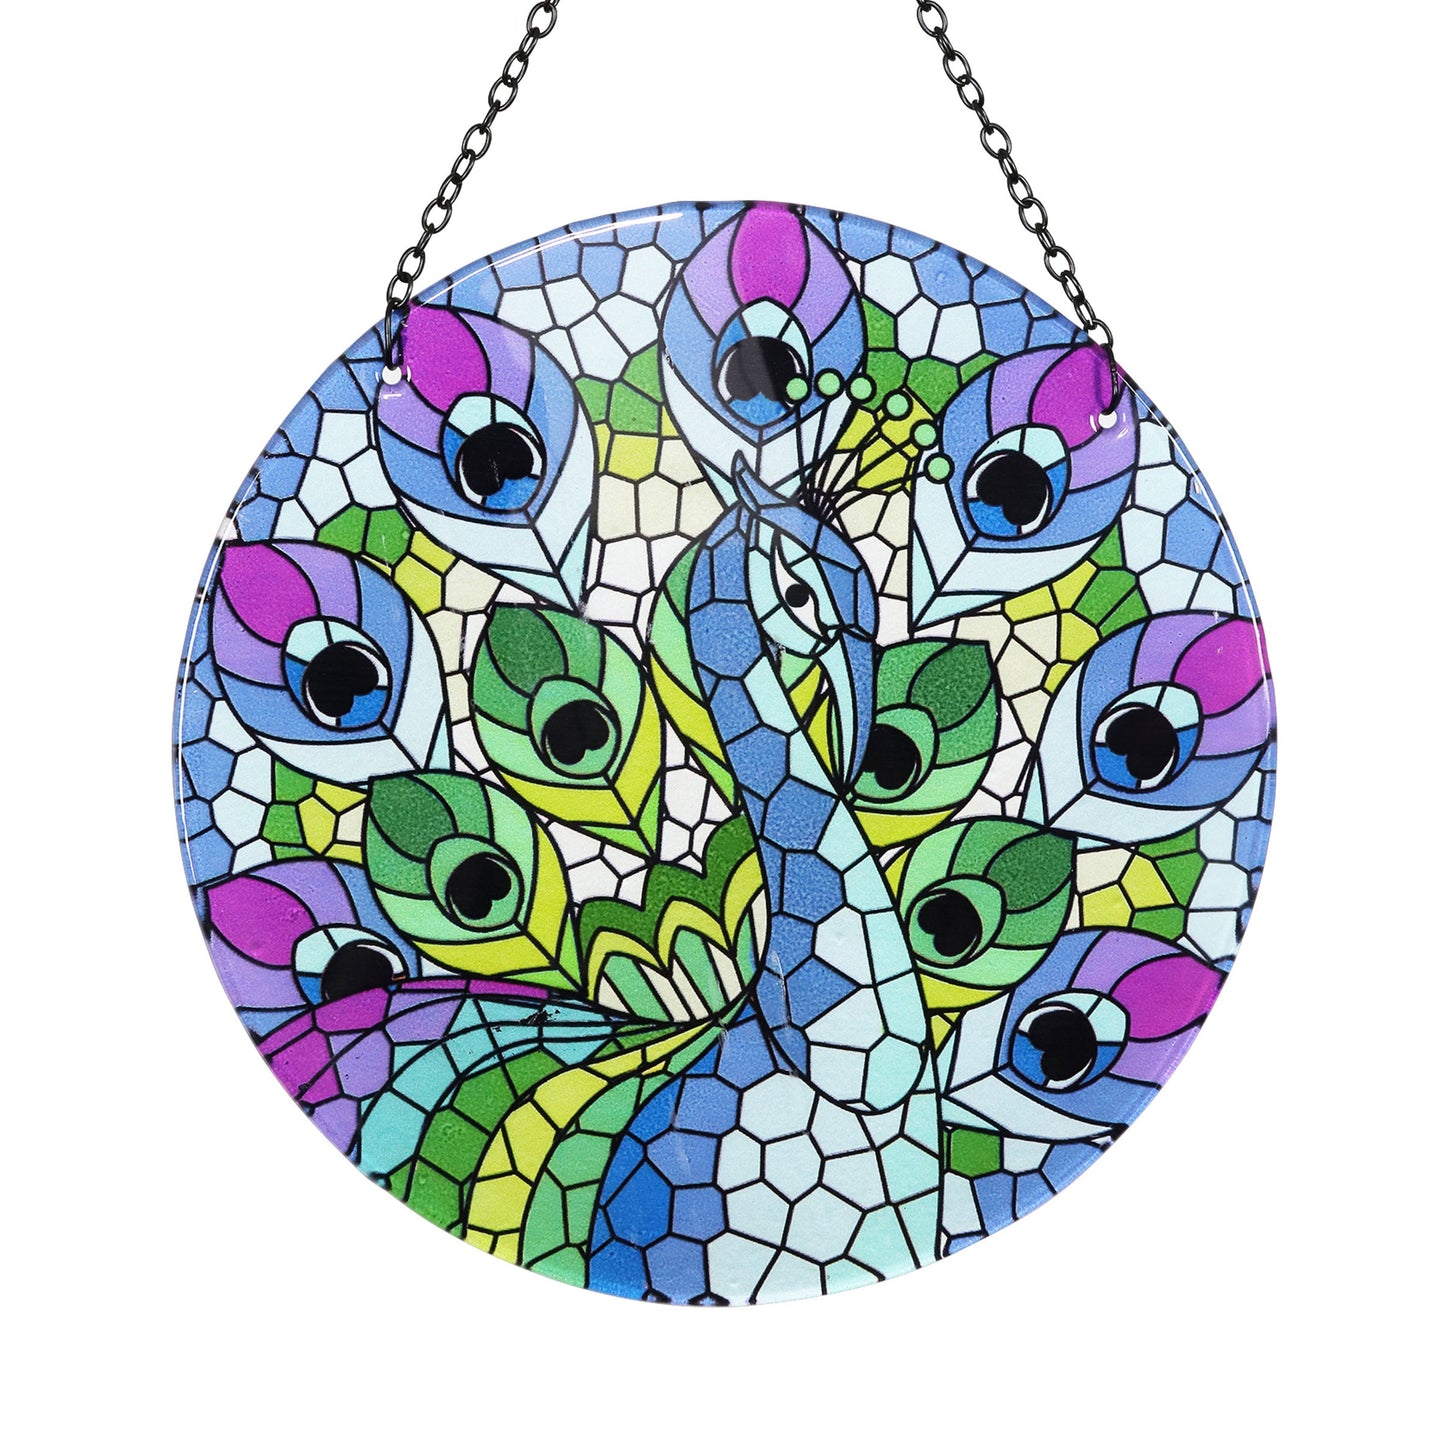 Hanging Mosaic Peacock Suncatcher, 10 Inch